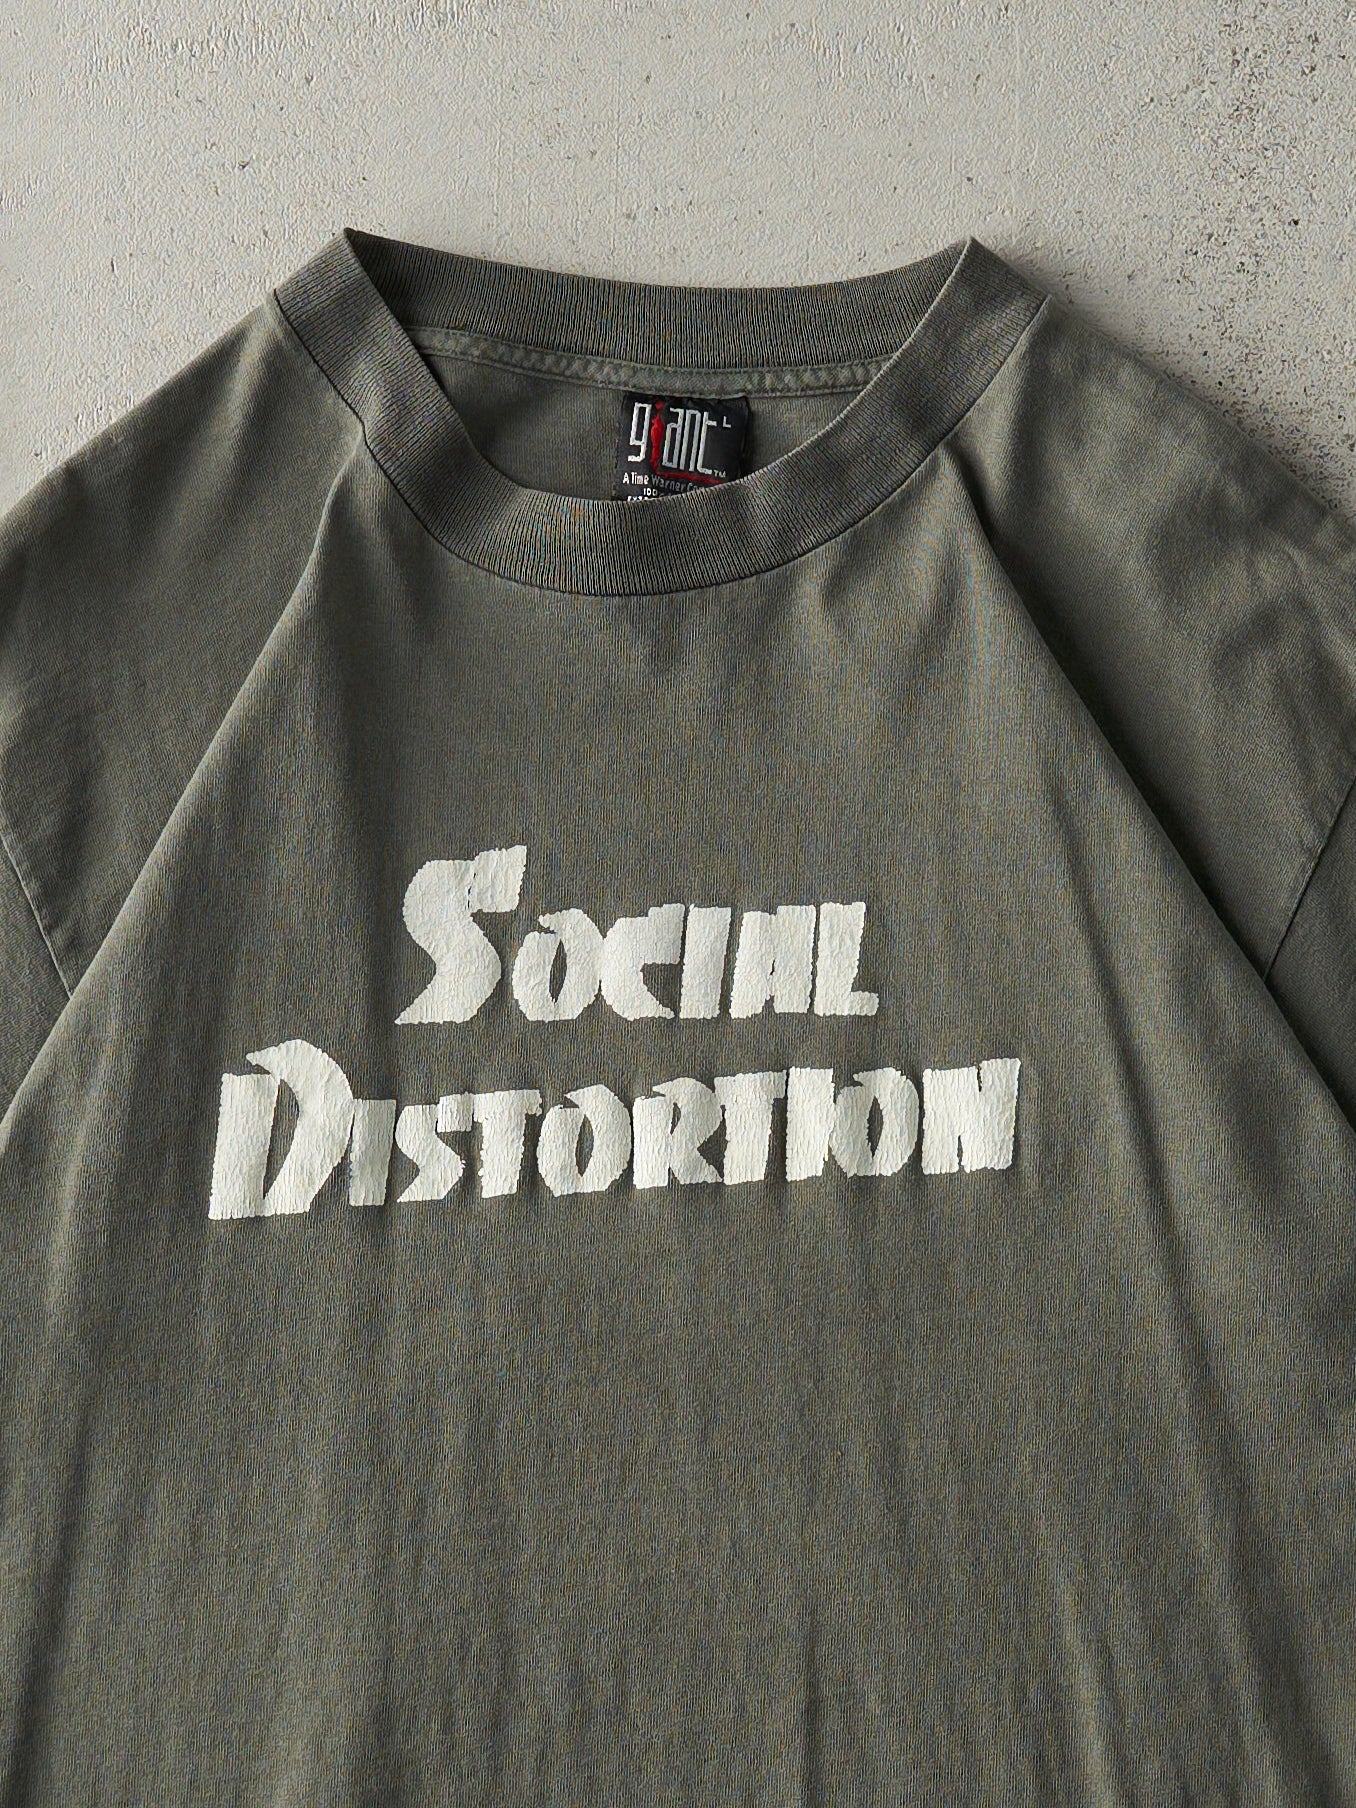 Vintage 90s Washed Green Social Distortion White Trash Album Tee (M)